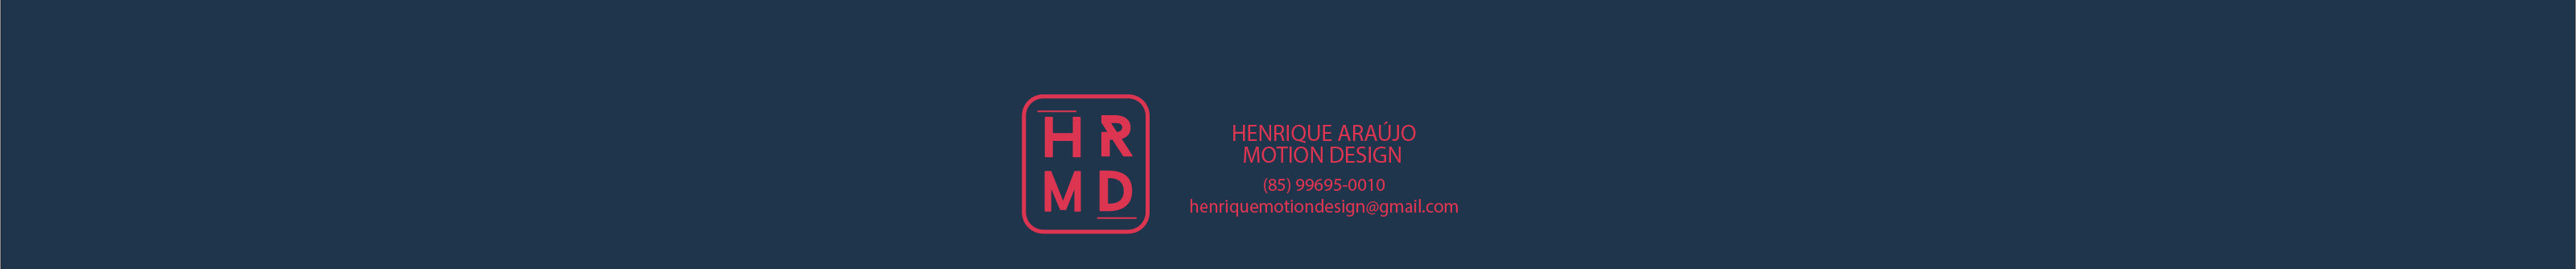 Profielbanner van Henrique Araújo